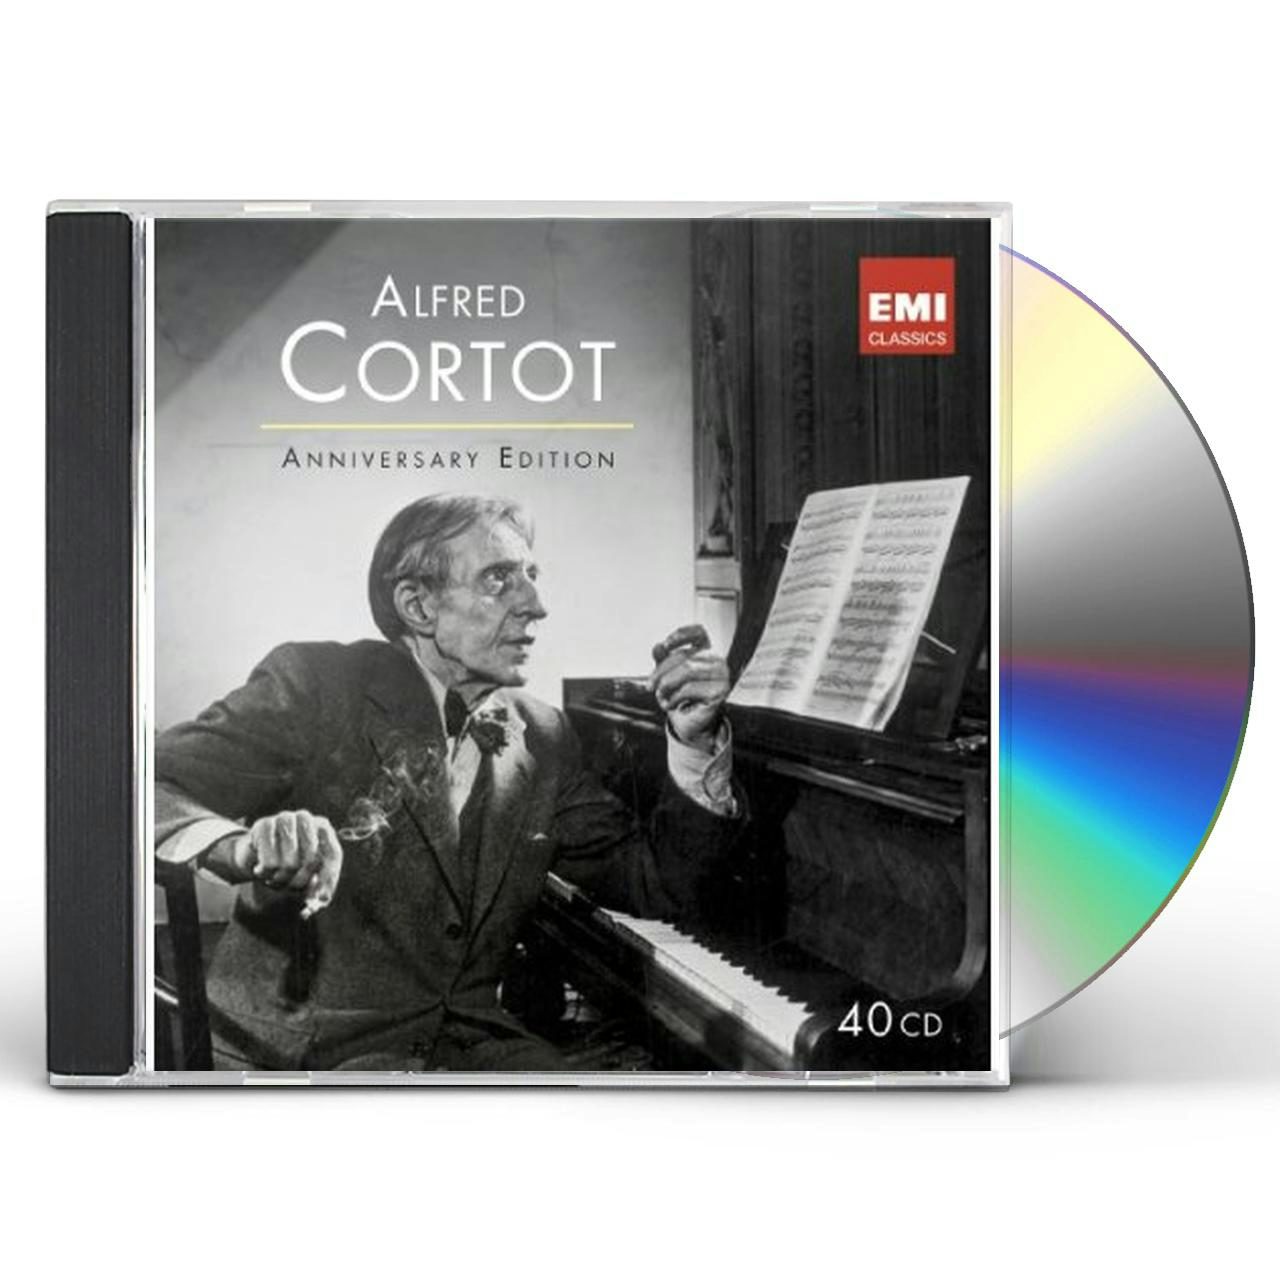 Alfred Cortot ANNIVERSARY EDITION CD